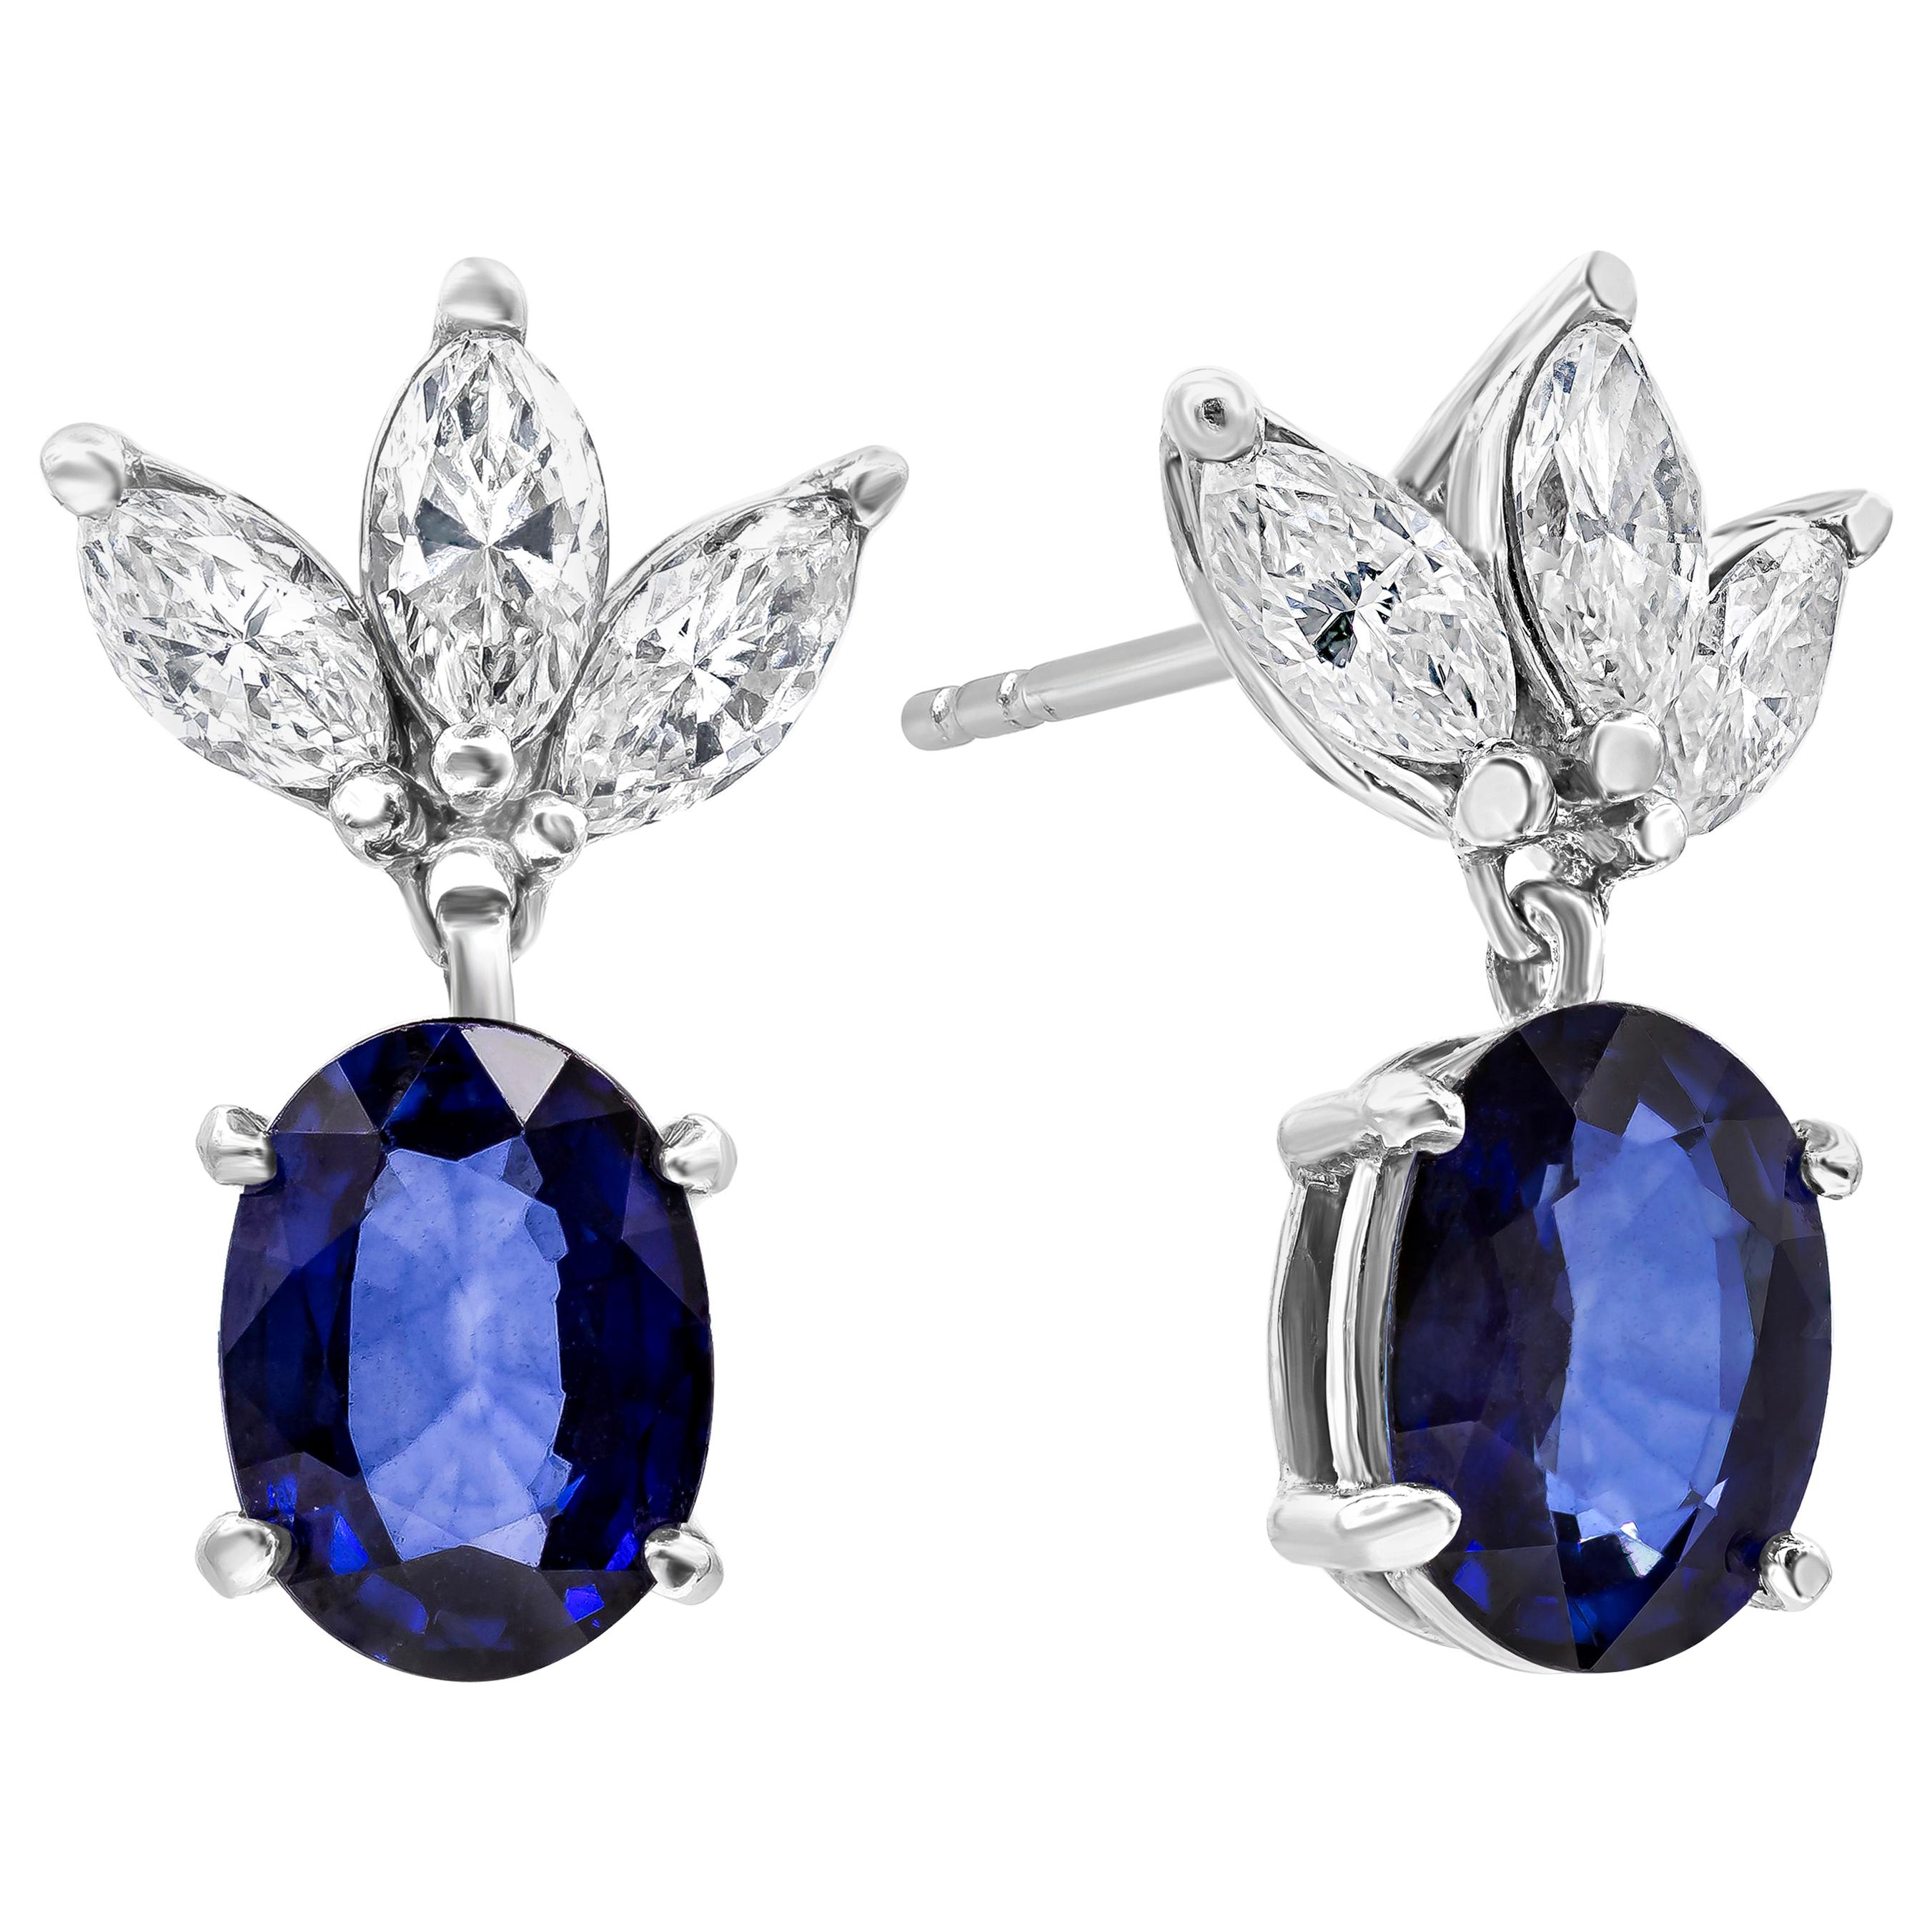 Roman Malakov, Oval Cut Blue Sapphire and Diamond Drop Earrings